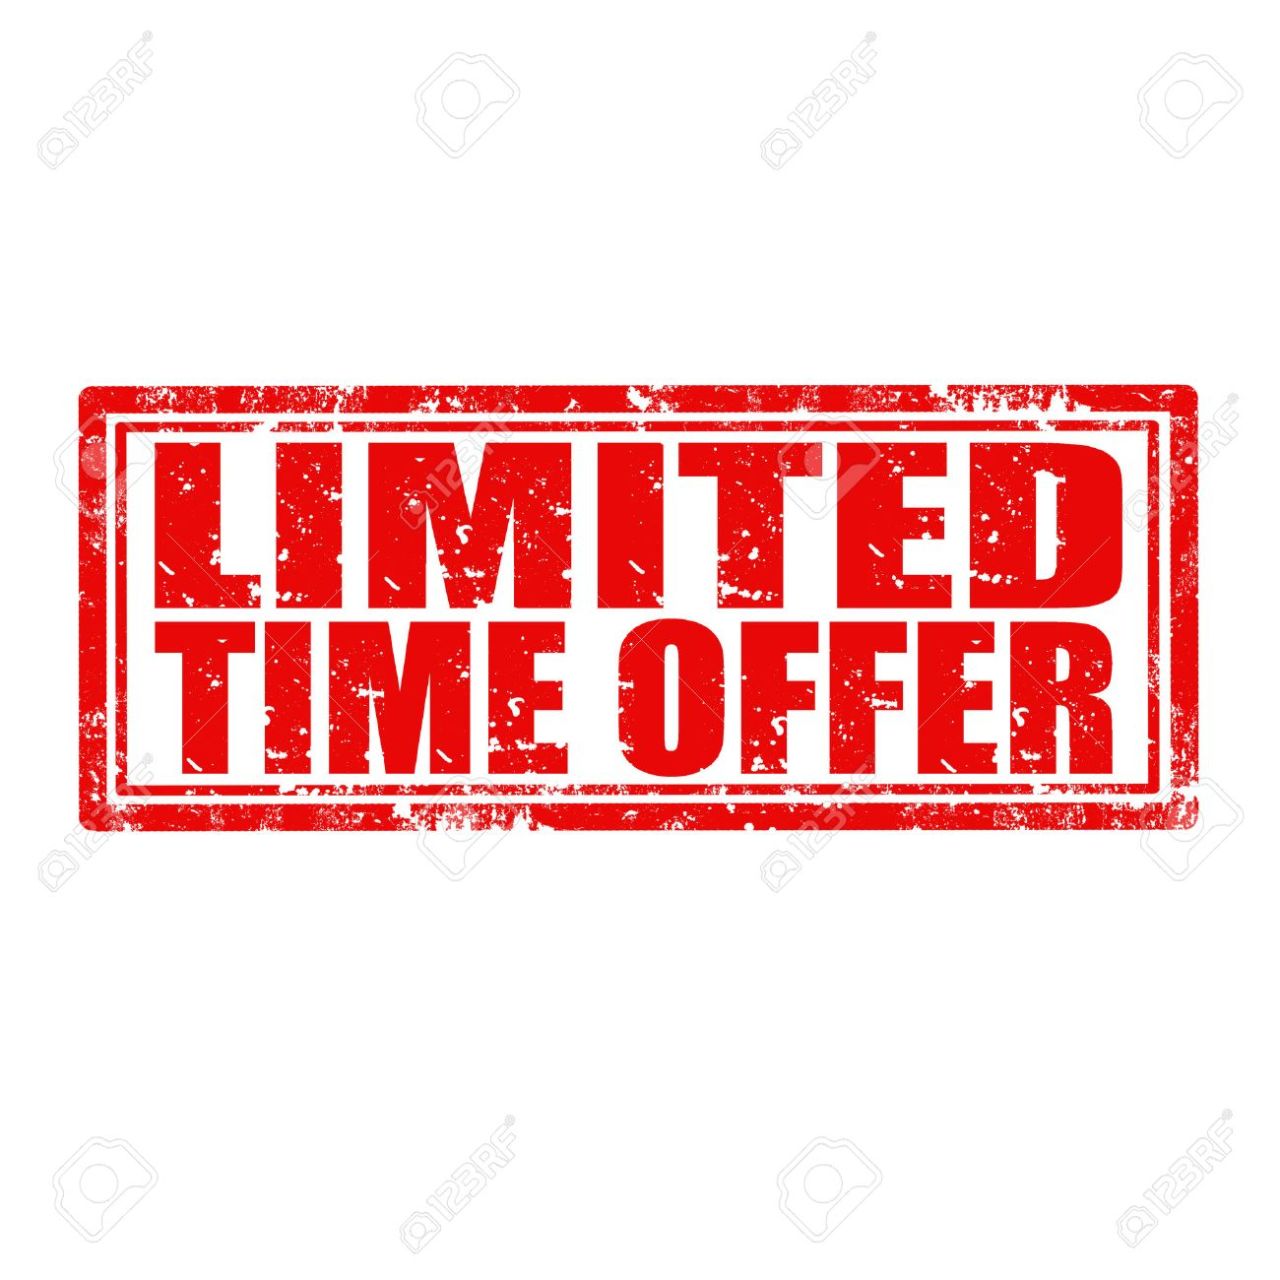 Limit offer. Limited time offer. Limited time offer вектор. Штамп времени. Limited time only.